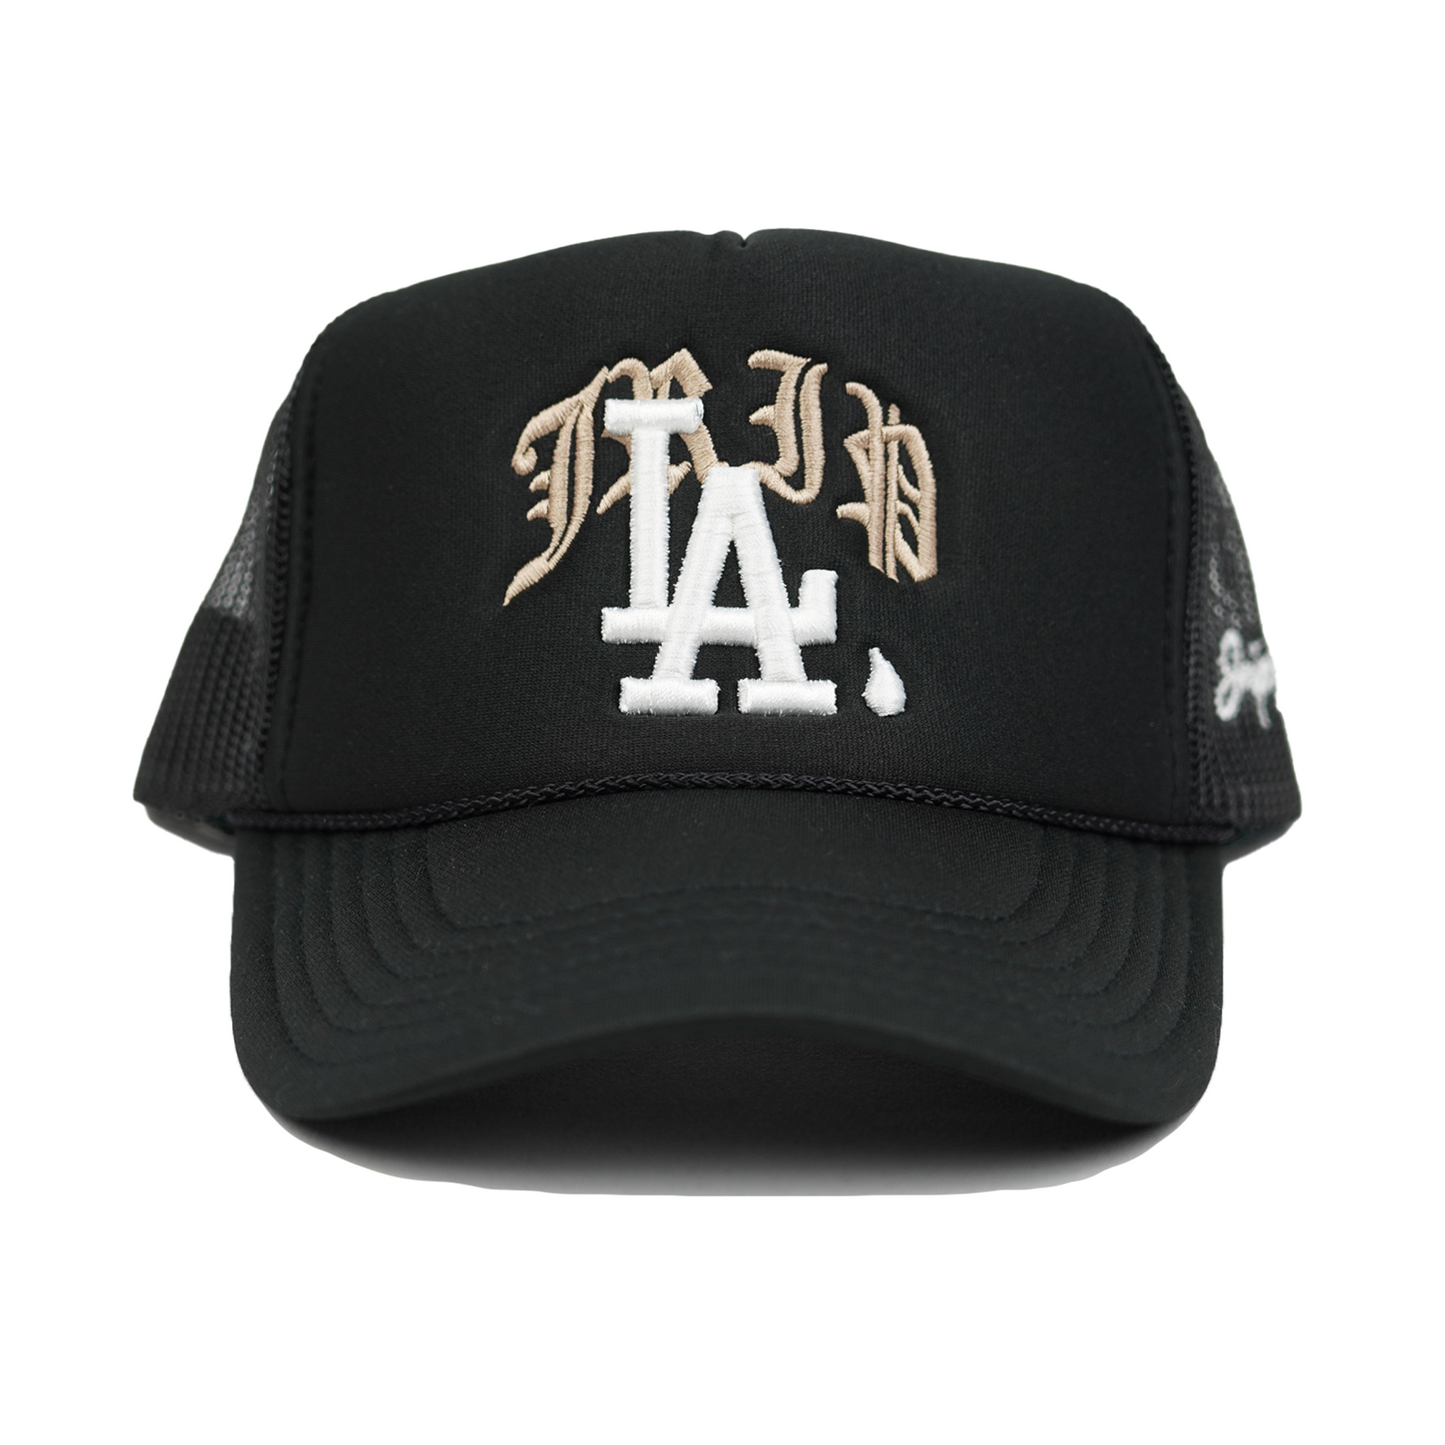 Jrip LA Trucker Hat (BLACK)